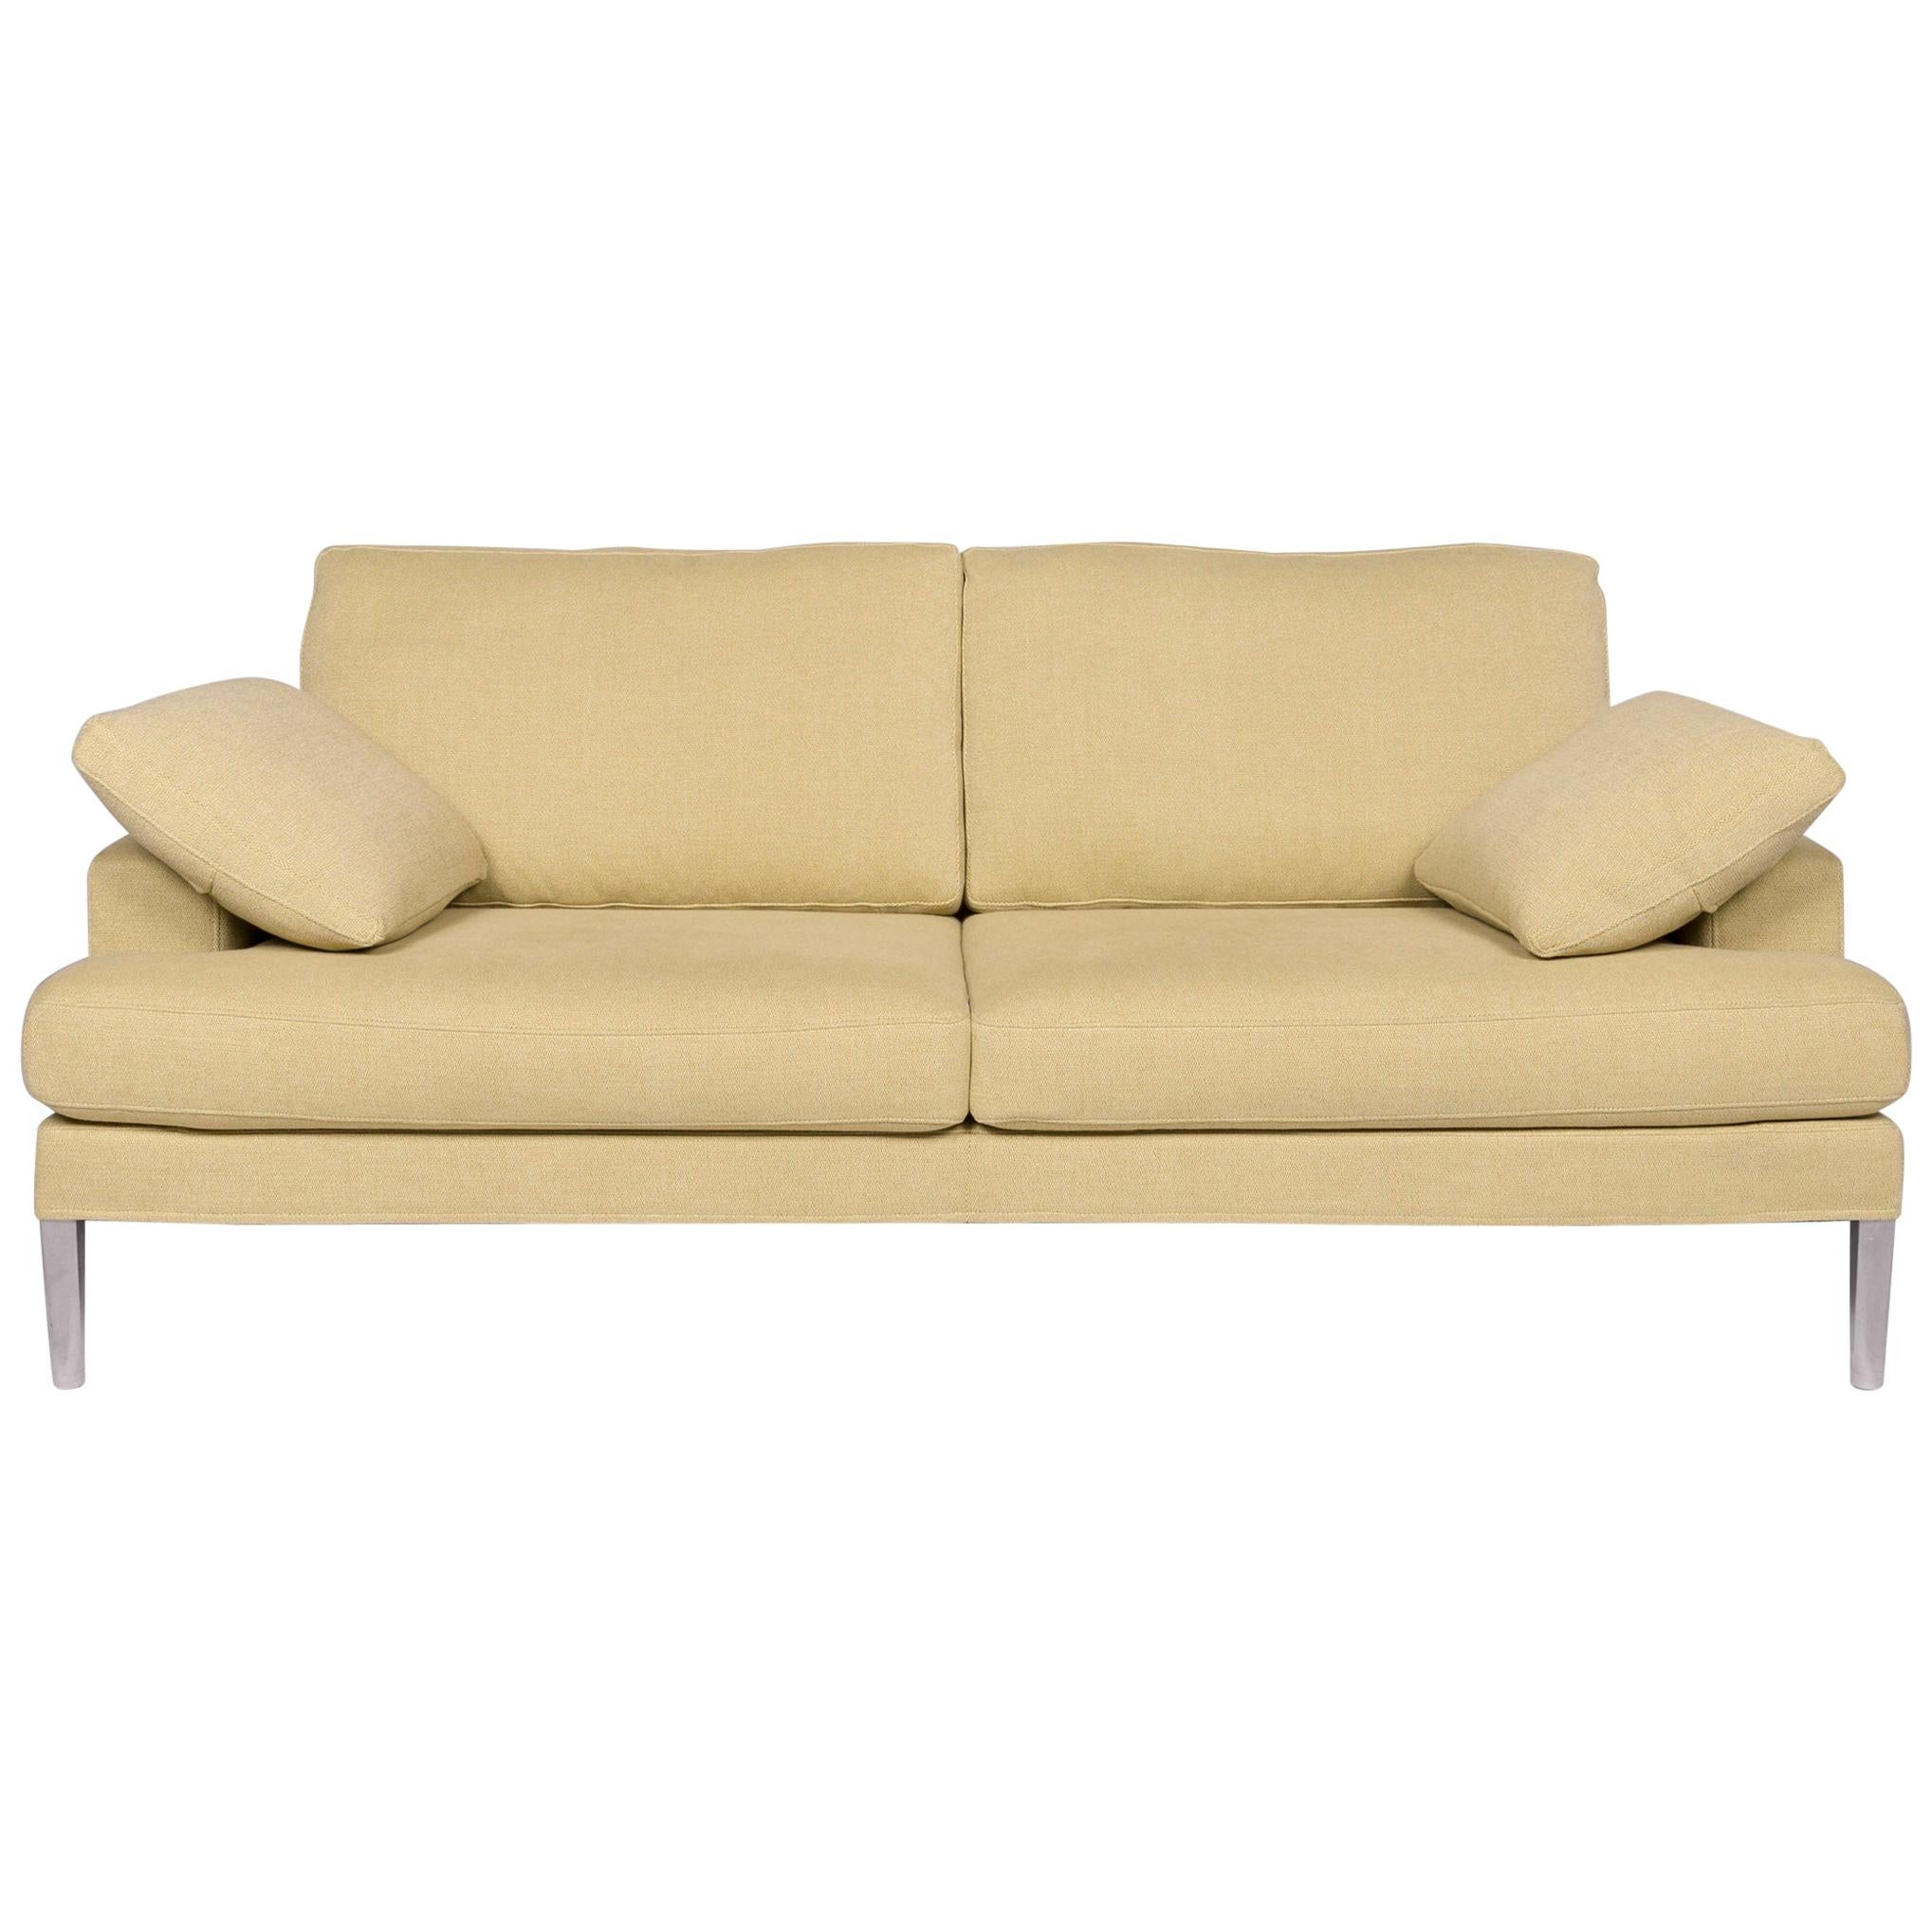 FSM Clarus Fabric Sofa Yellow Lemon Yellow Two-Seat Couch